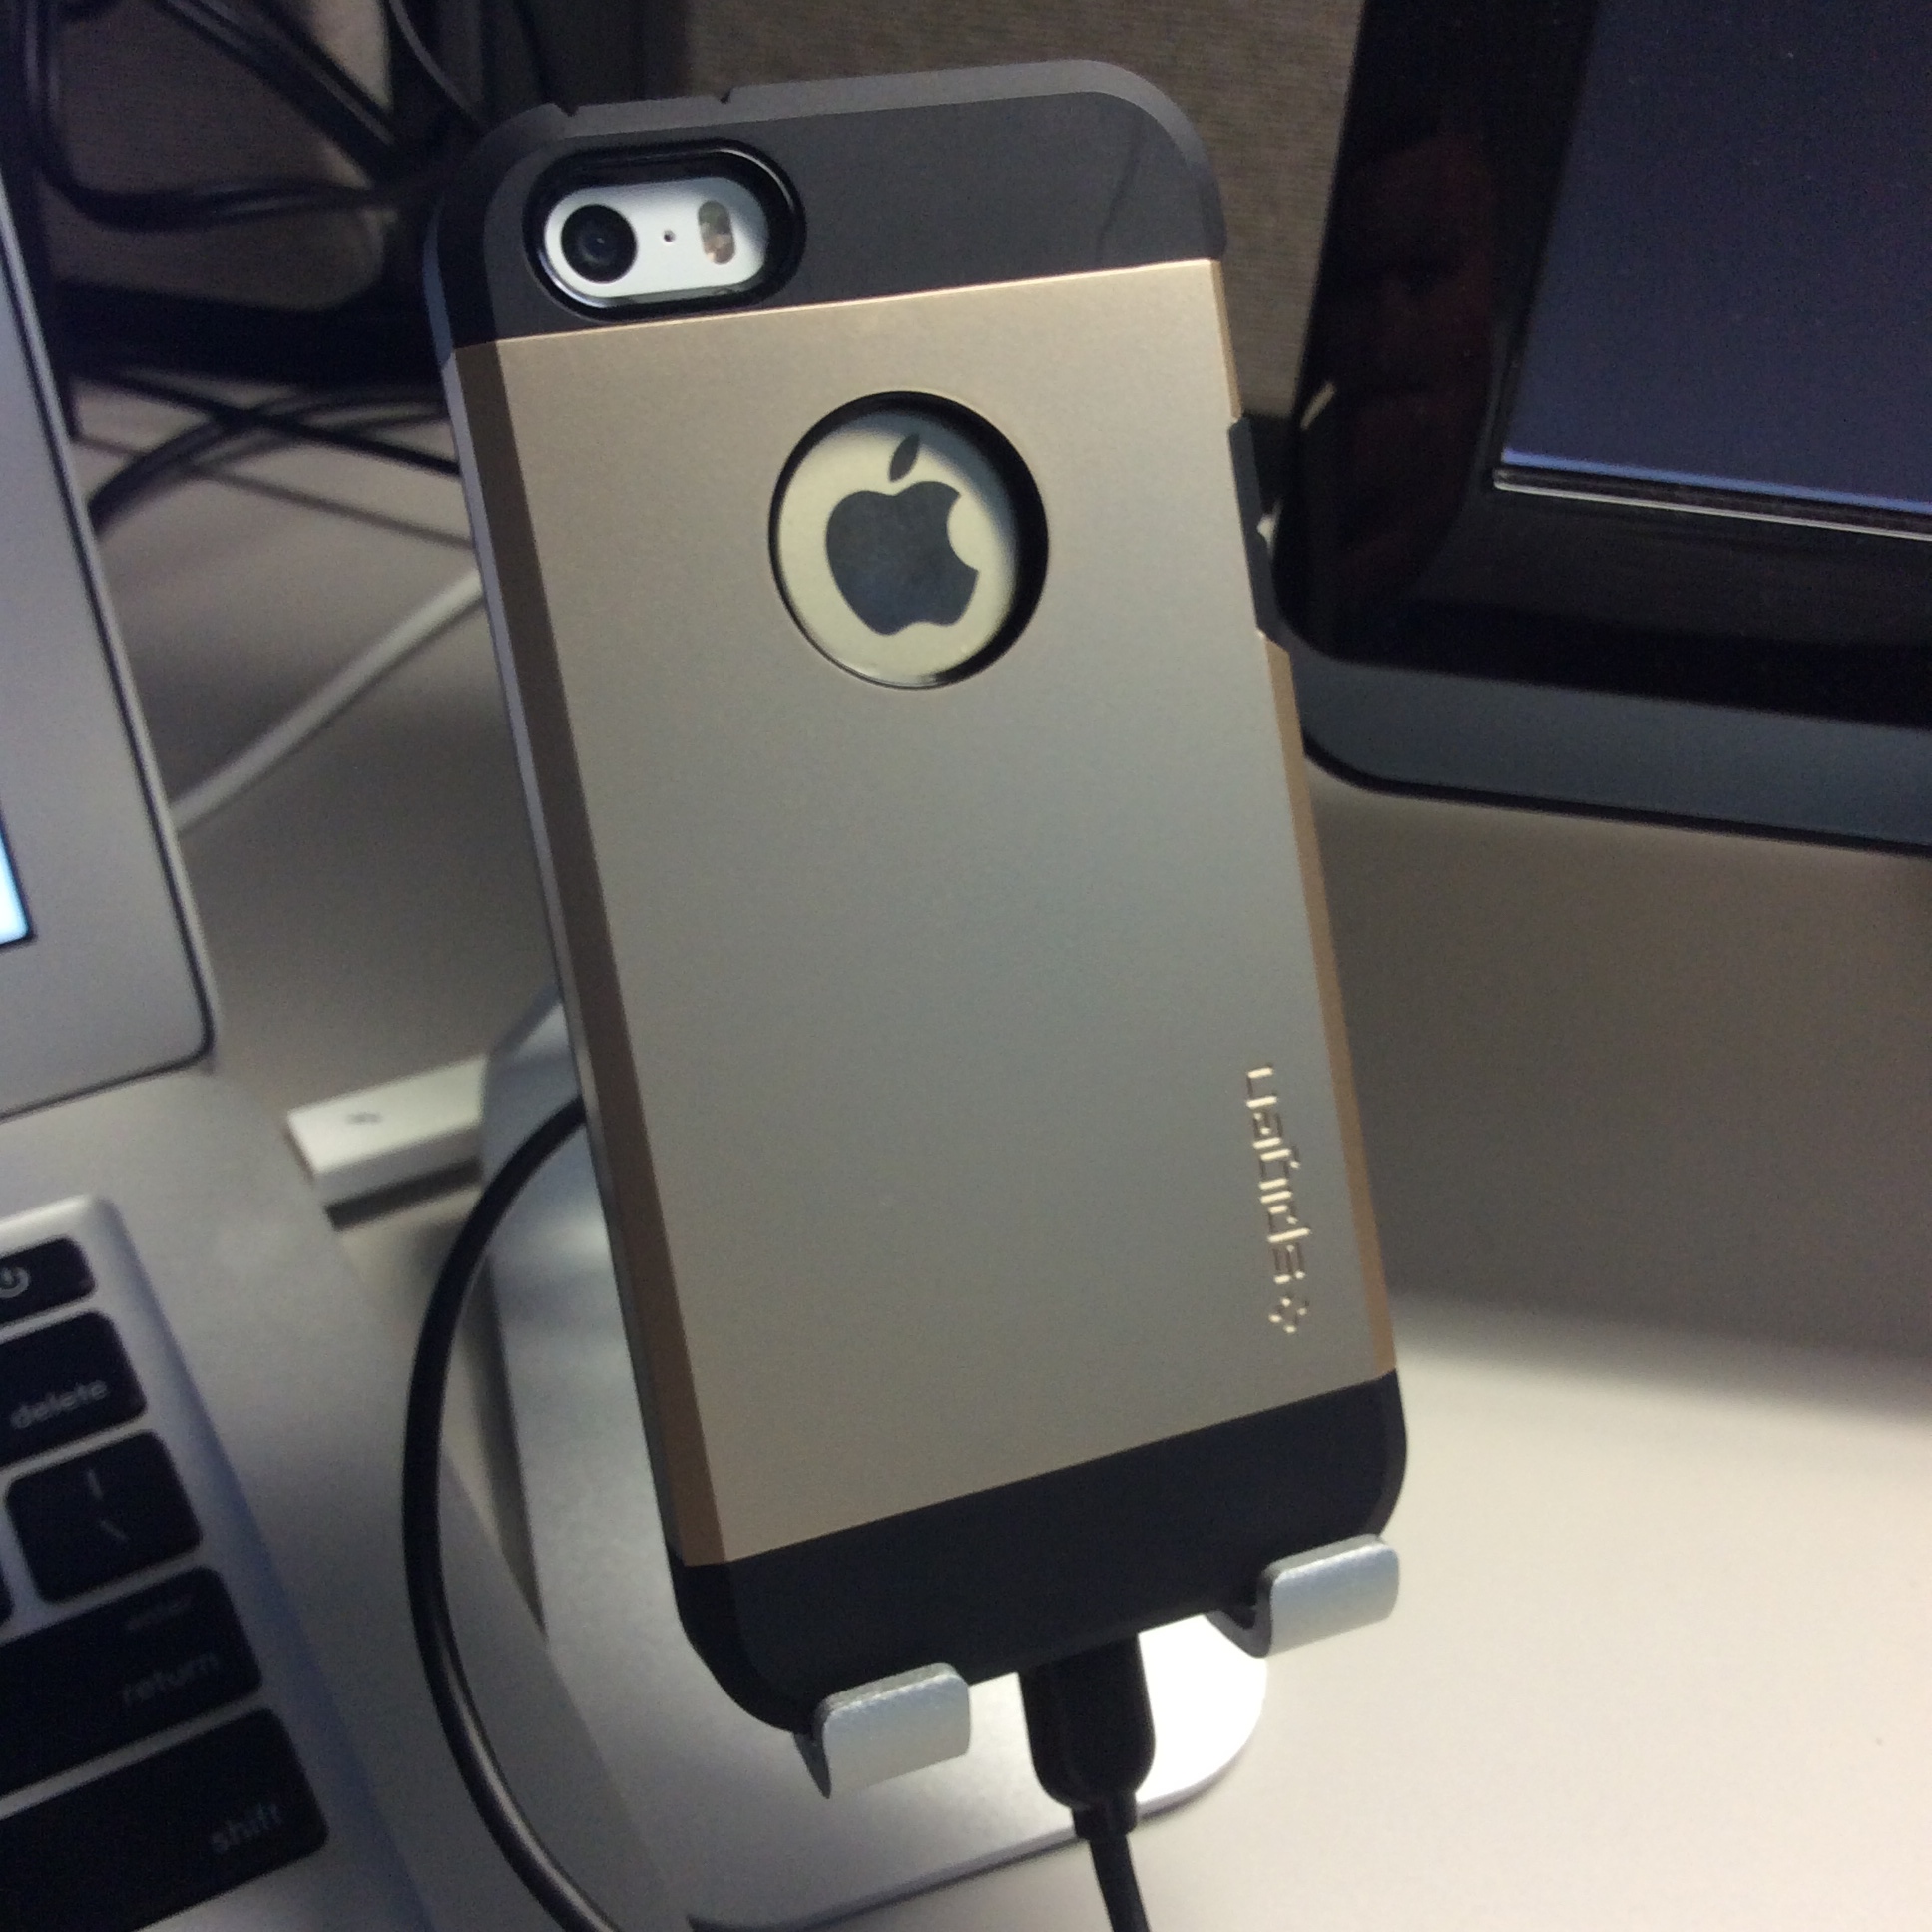 Spigen iPhone 5s case